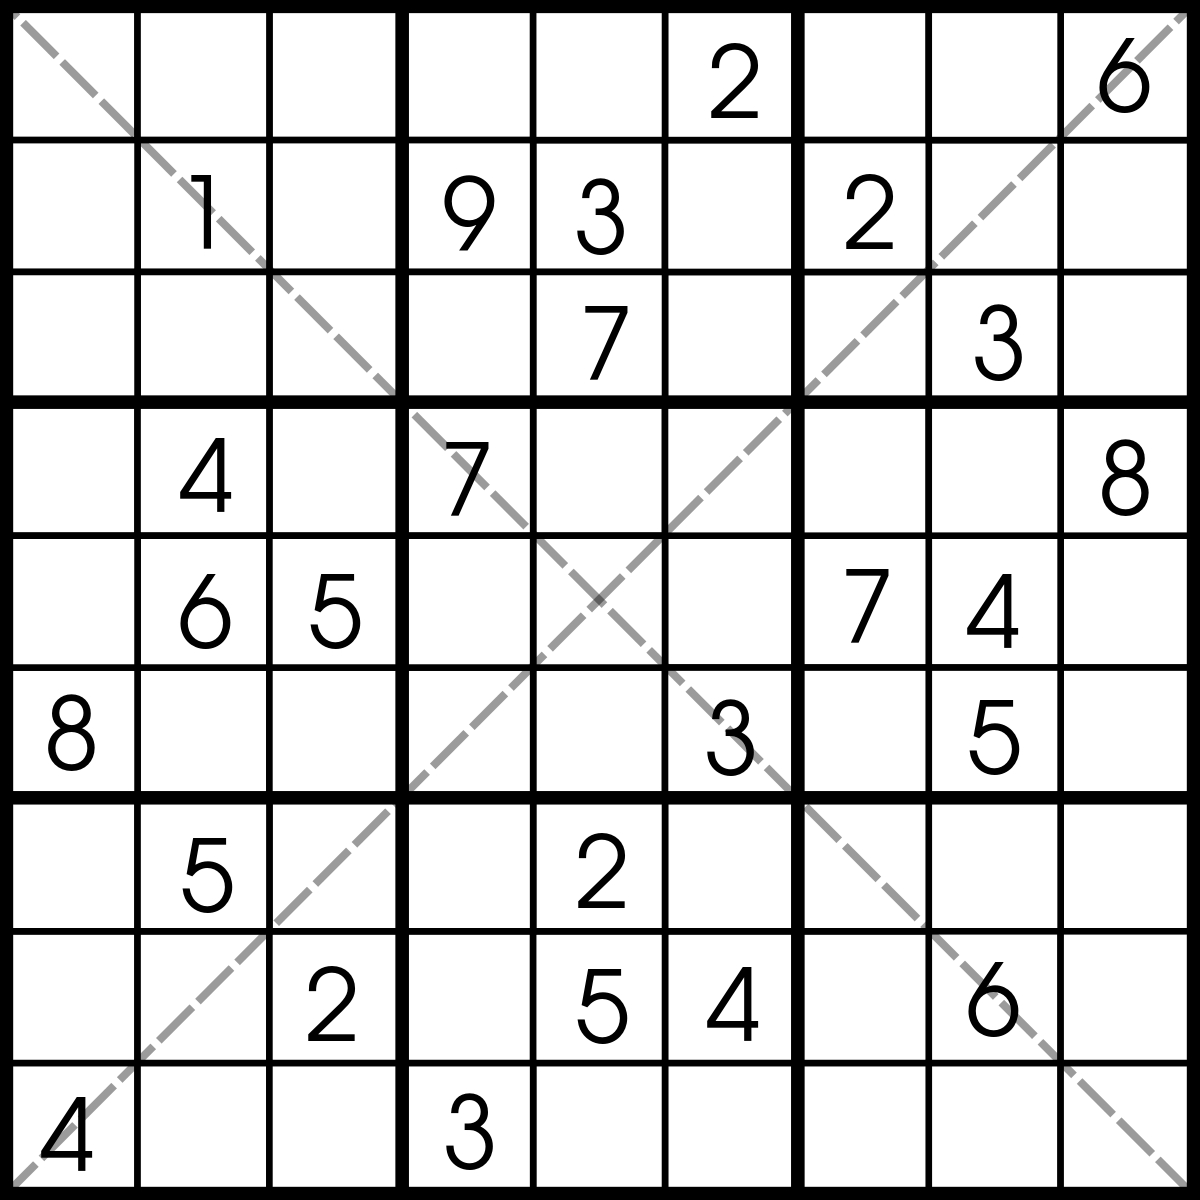 Diagonal Sudoku Puzzles Printable